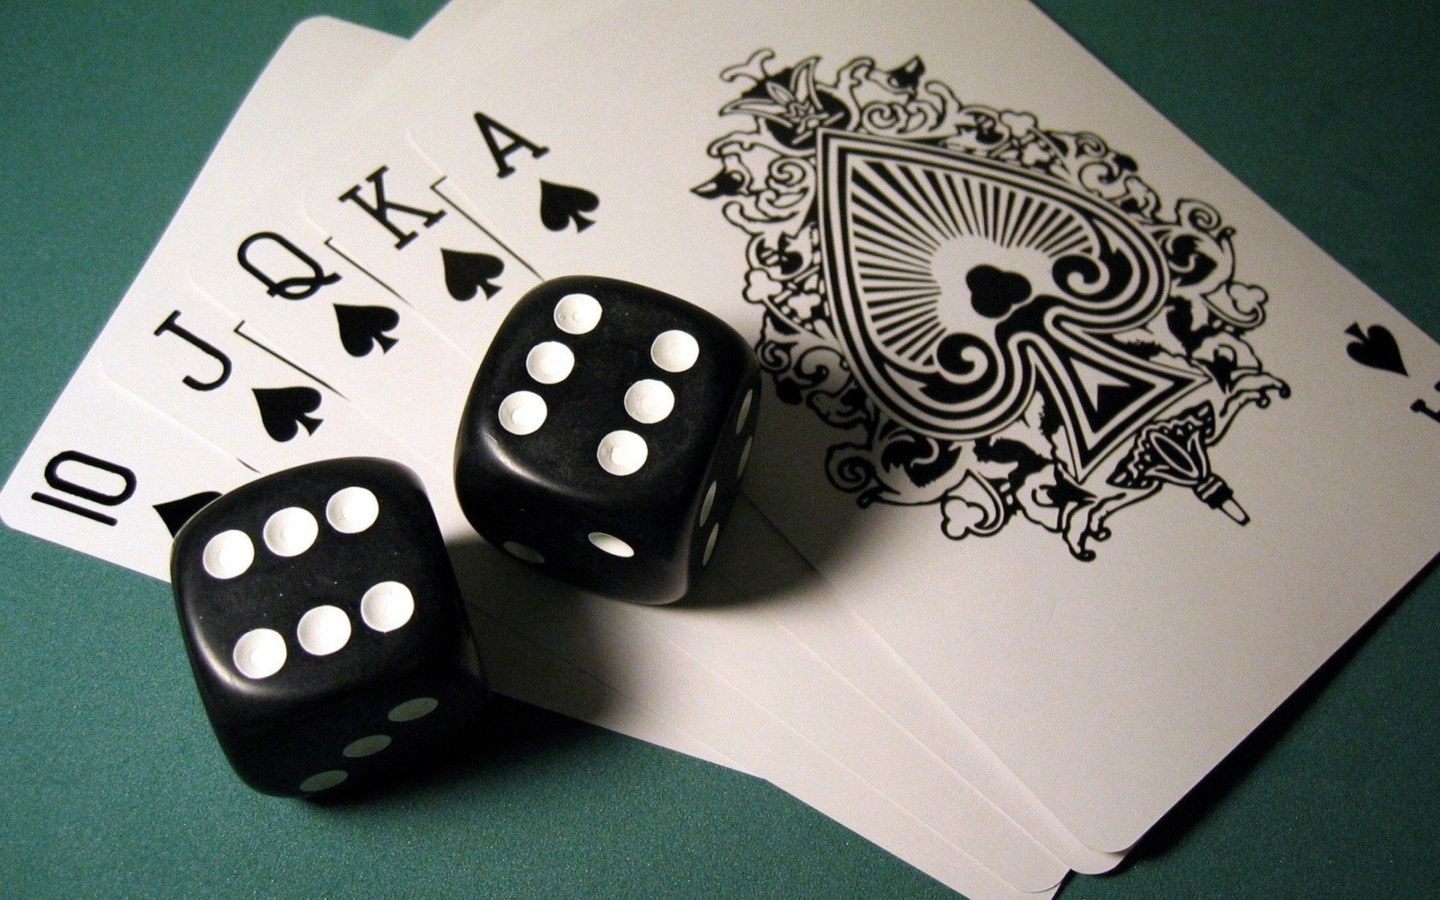 Das Gambling Dice and Cards Wallpaper 1440x900